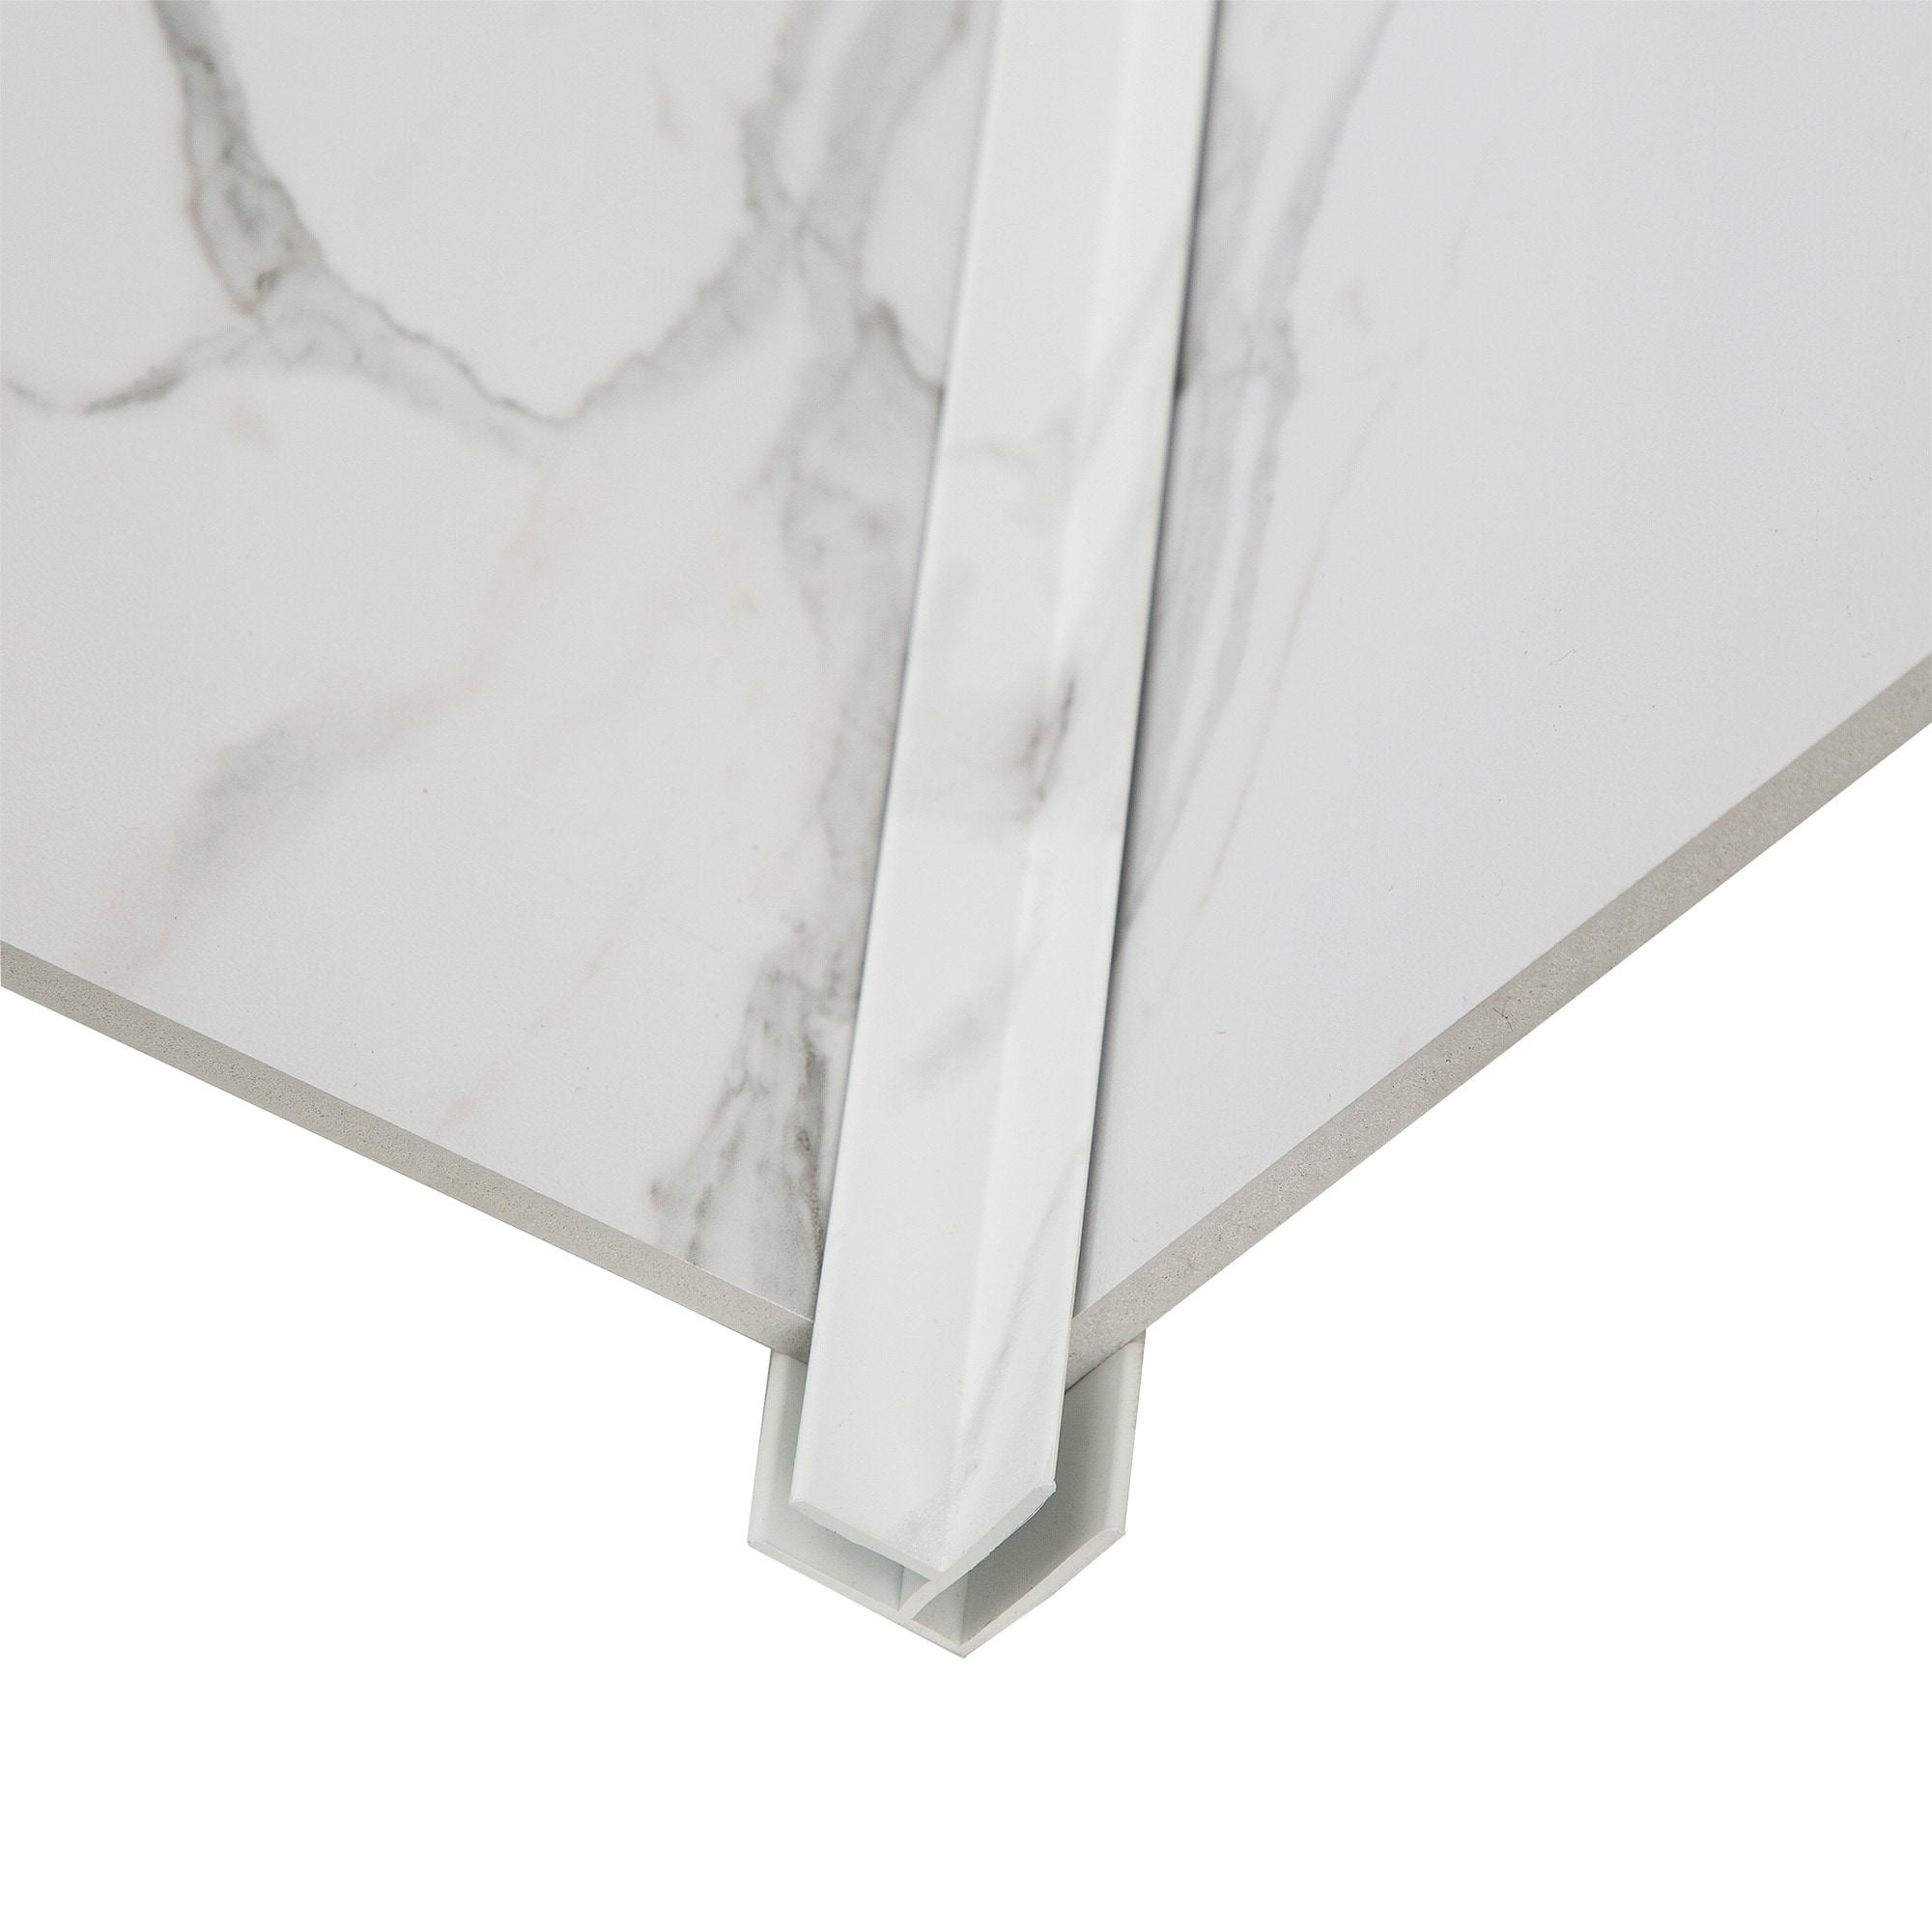 PALISADE Trim Kit 0.9375-in W x 94-in L Carrara Marble PVC Tile Edge Trim